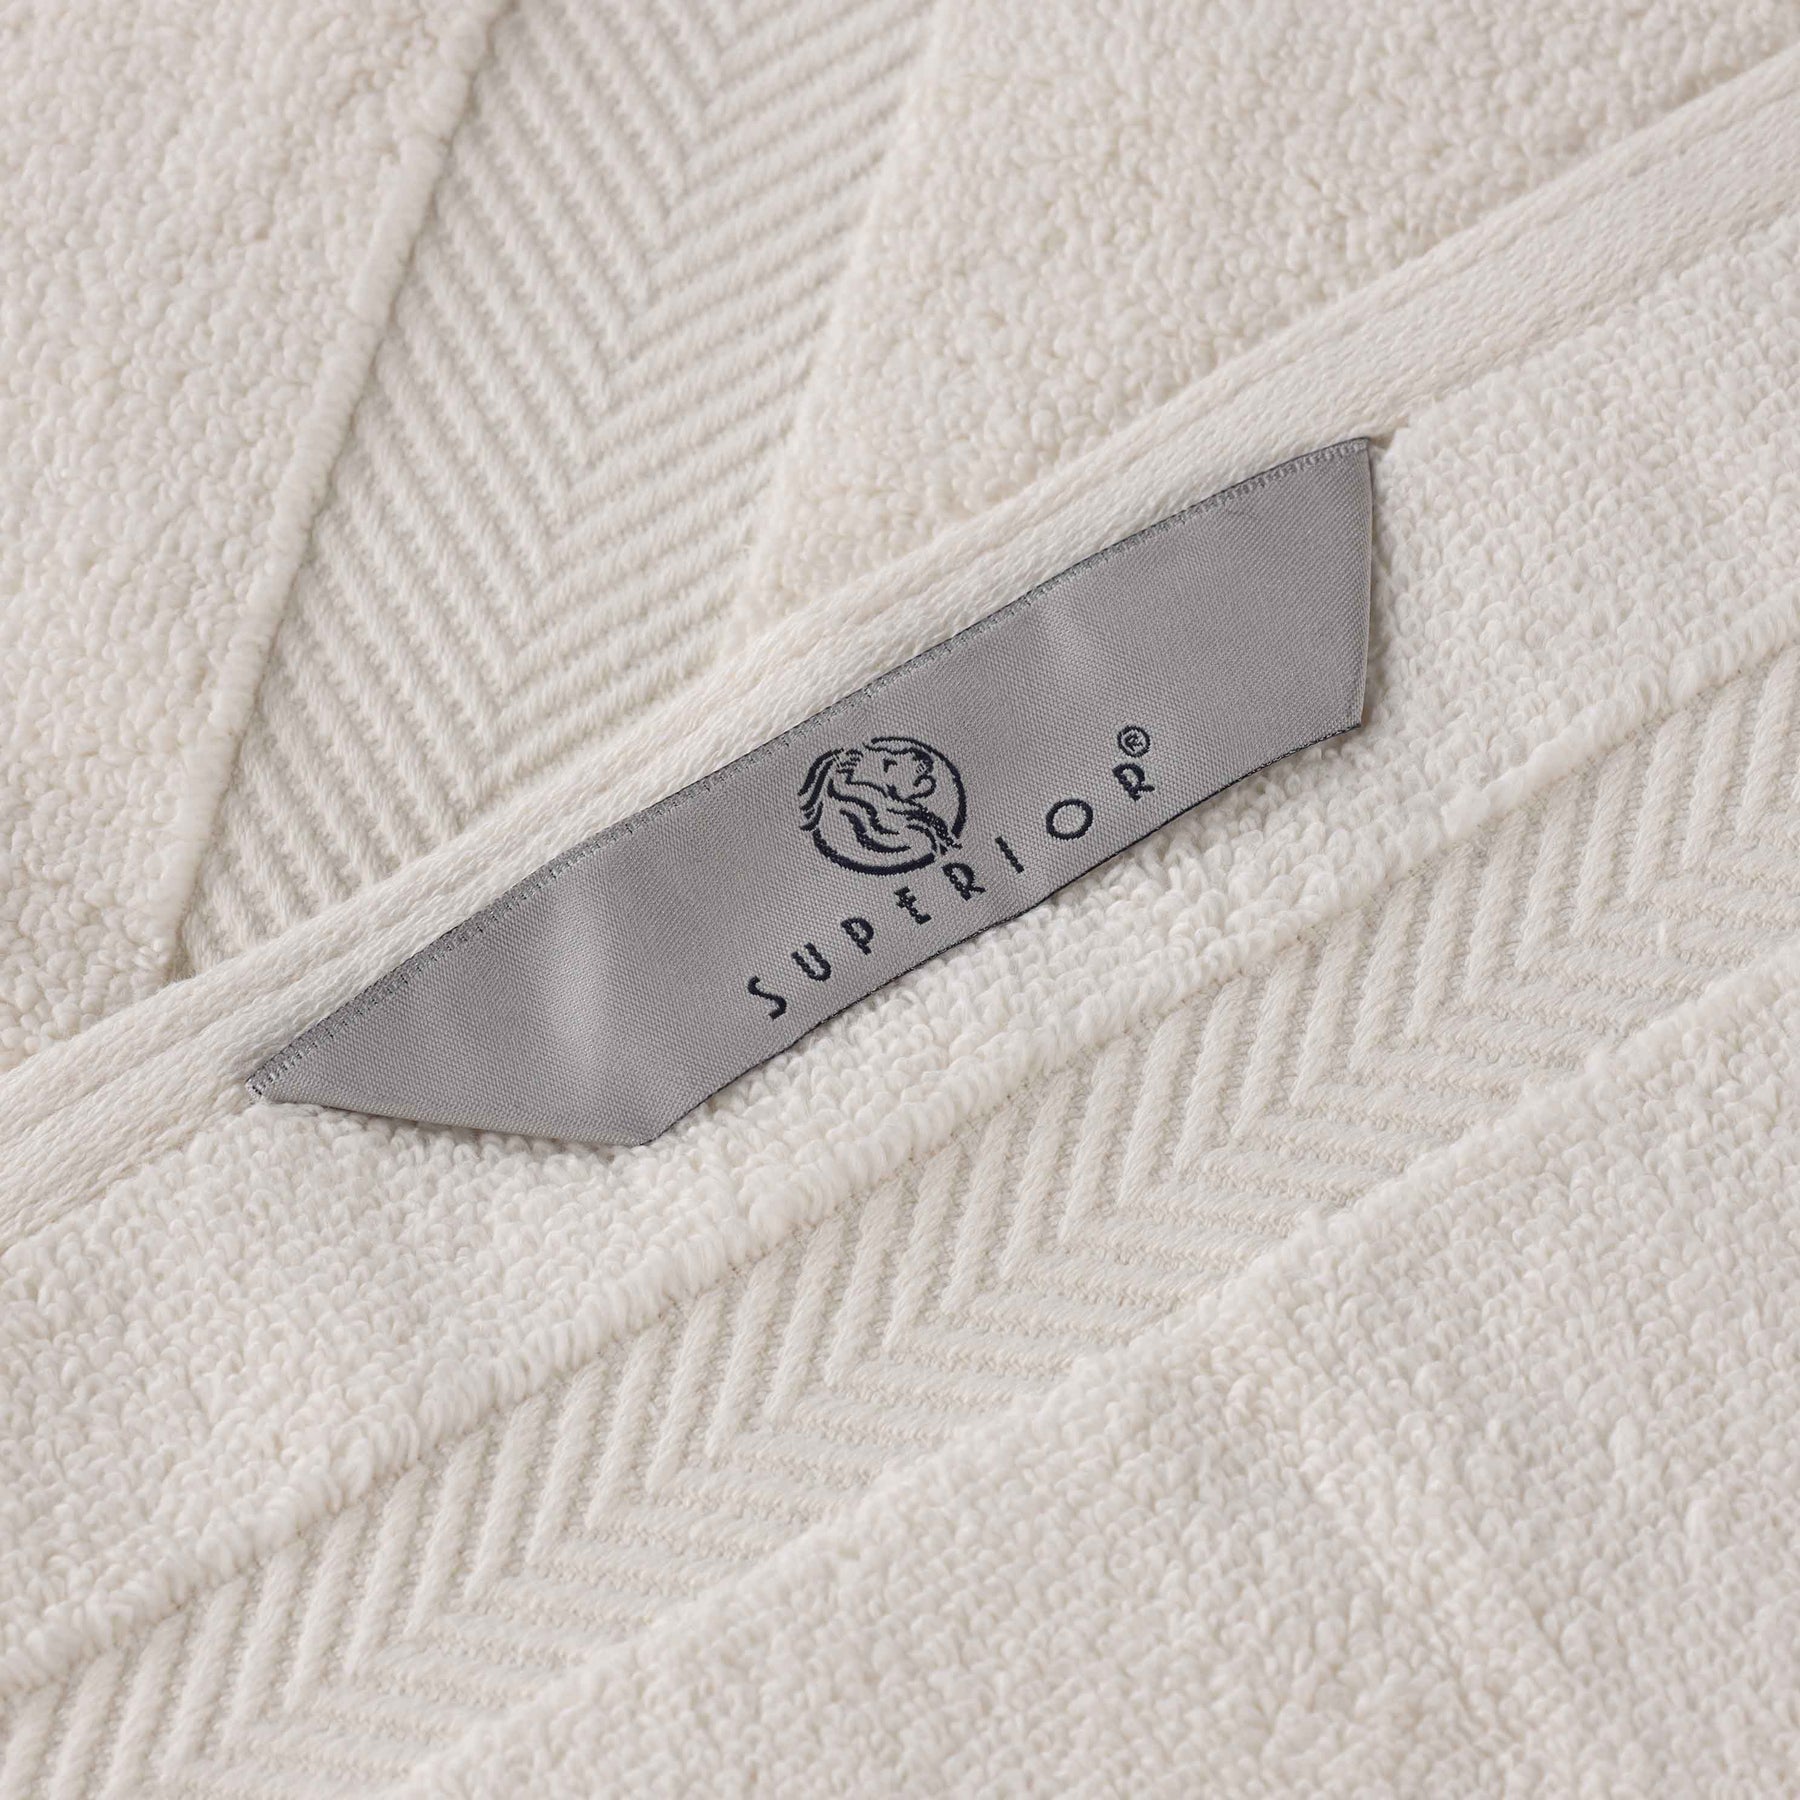 Zero-Twist Smart-Dry Combed Cotton 2 Piece Bath Sheet Set - Ivory